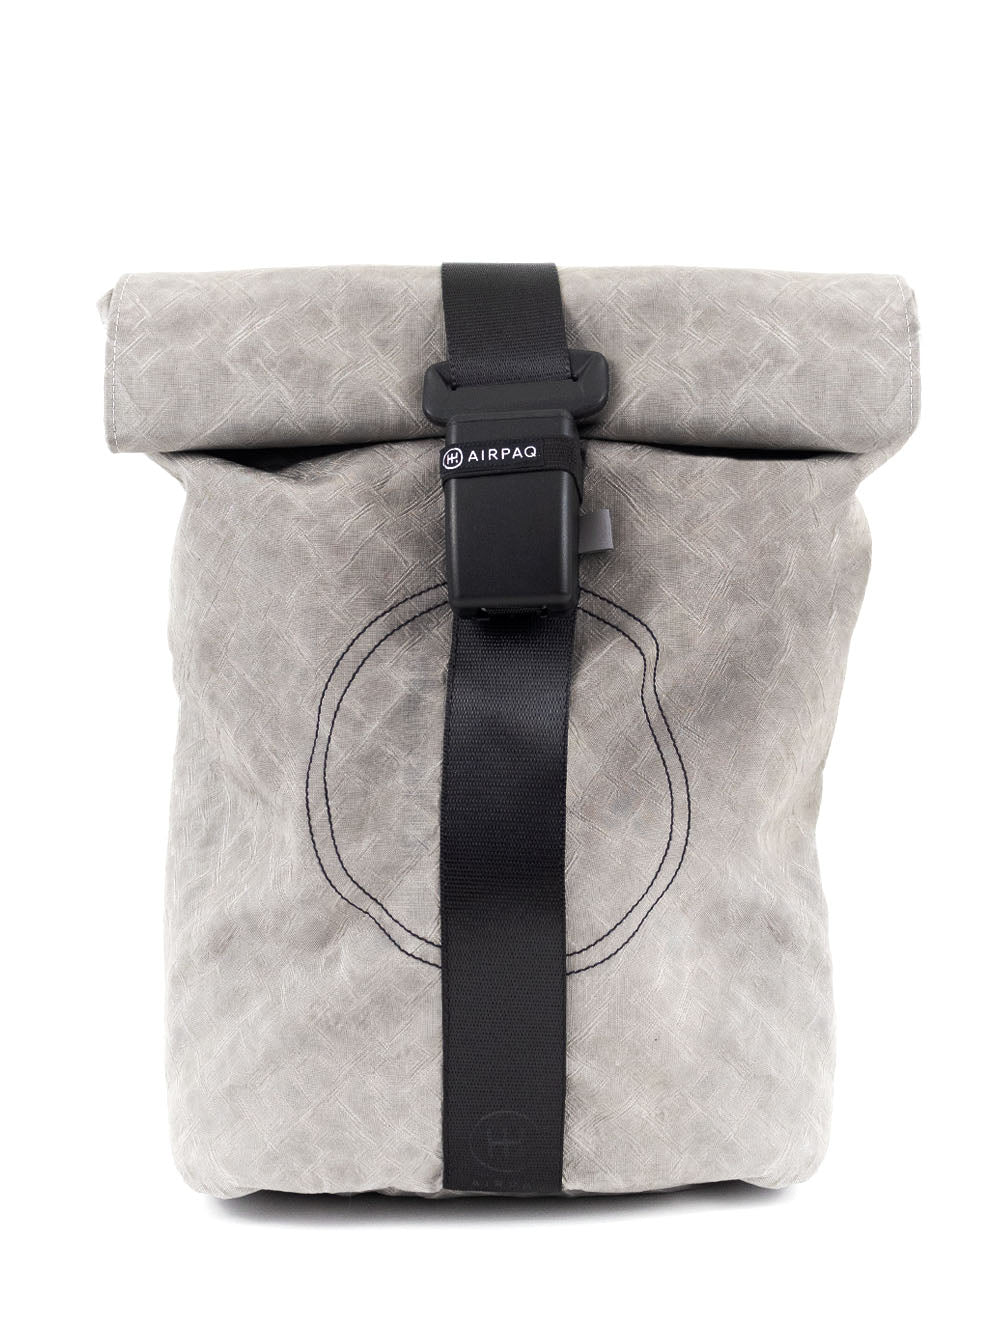 Airpaq sac à dos roll top - coloré gris 